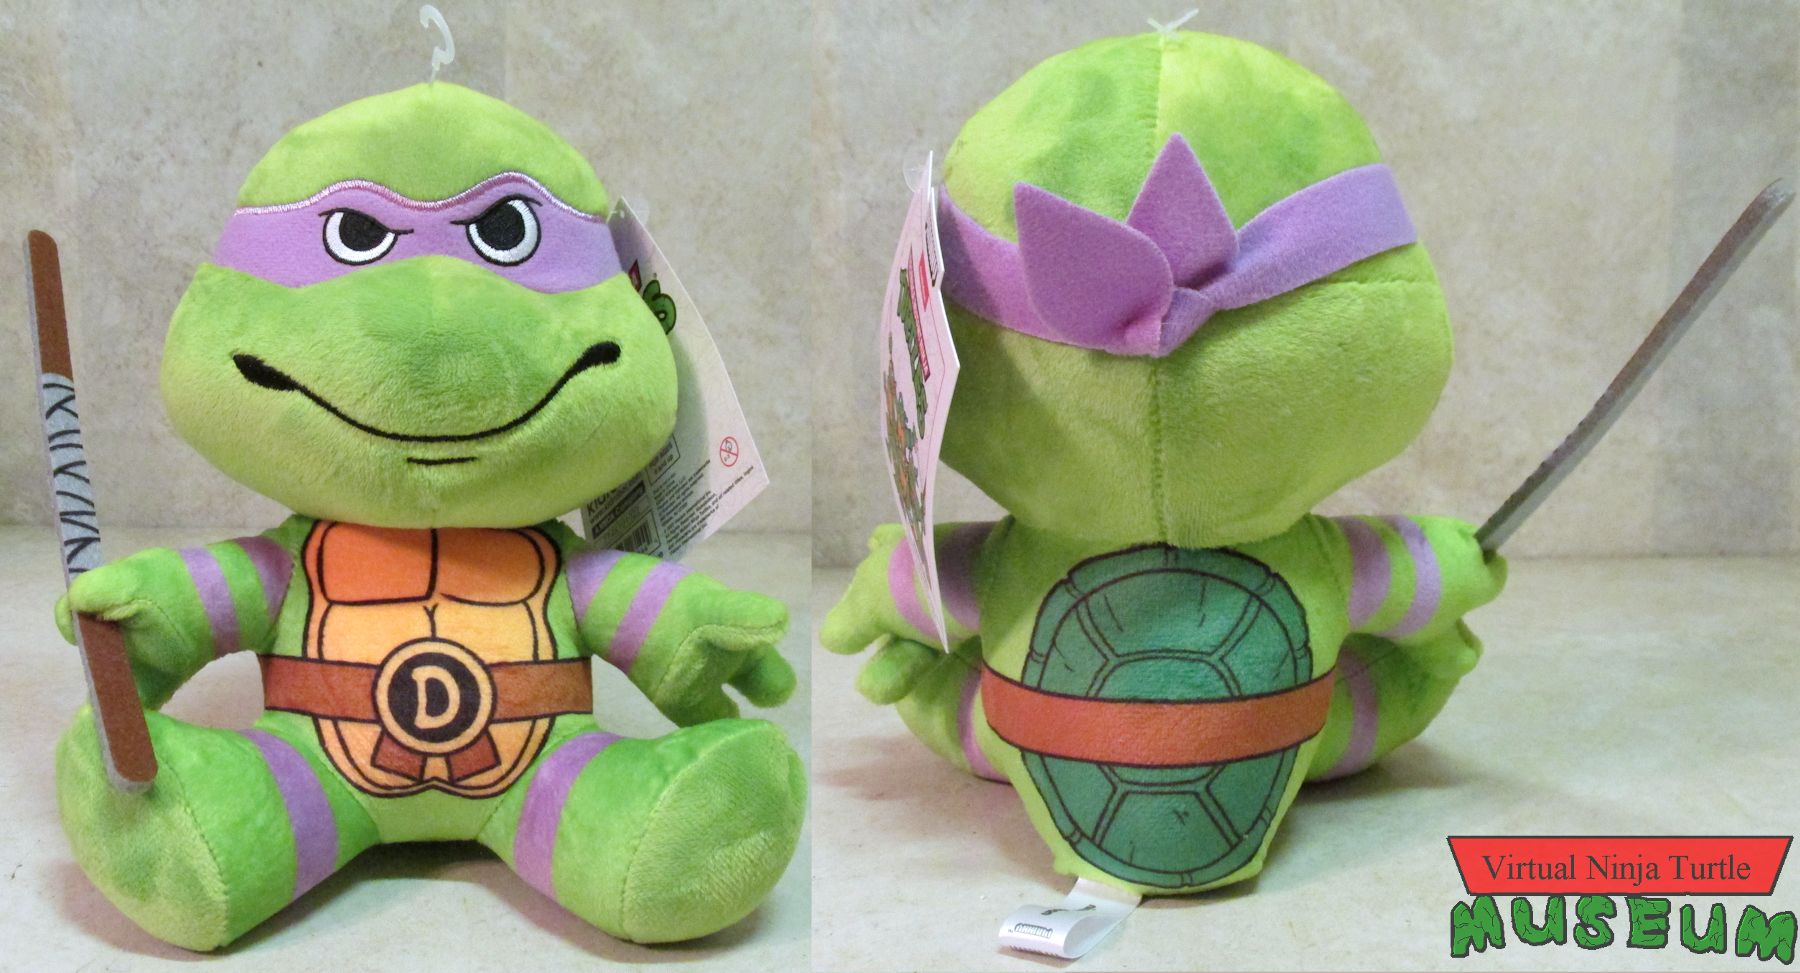 Phunny Donatello Plush front and back